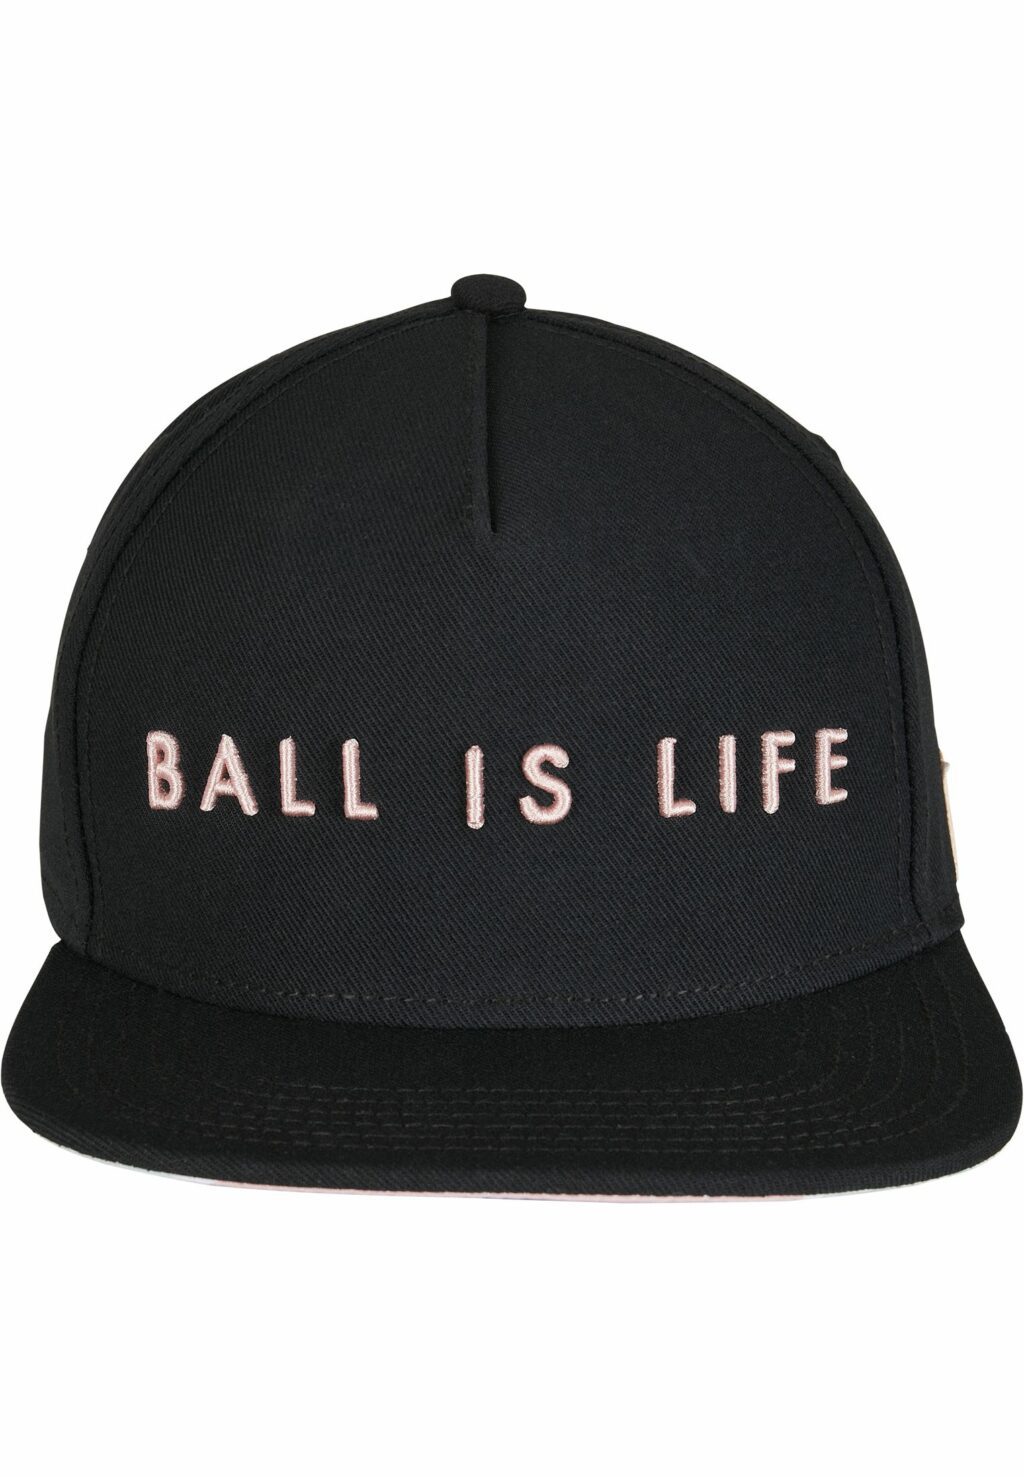 C&S WL Ball Is Life Snapback black/mc one CS1894